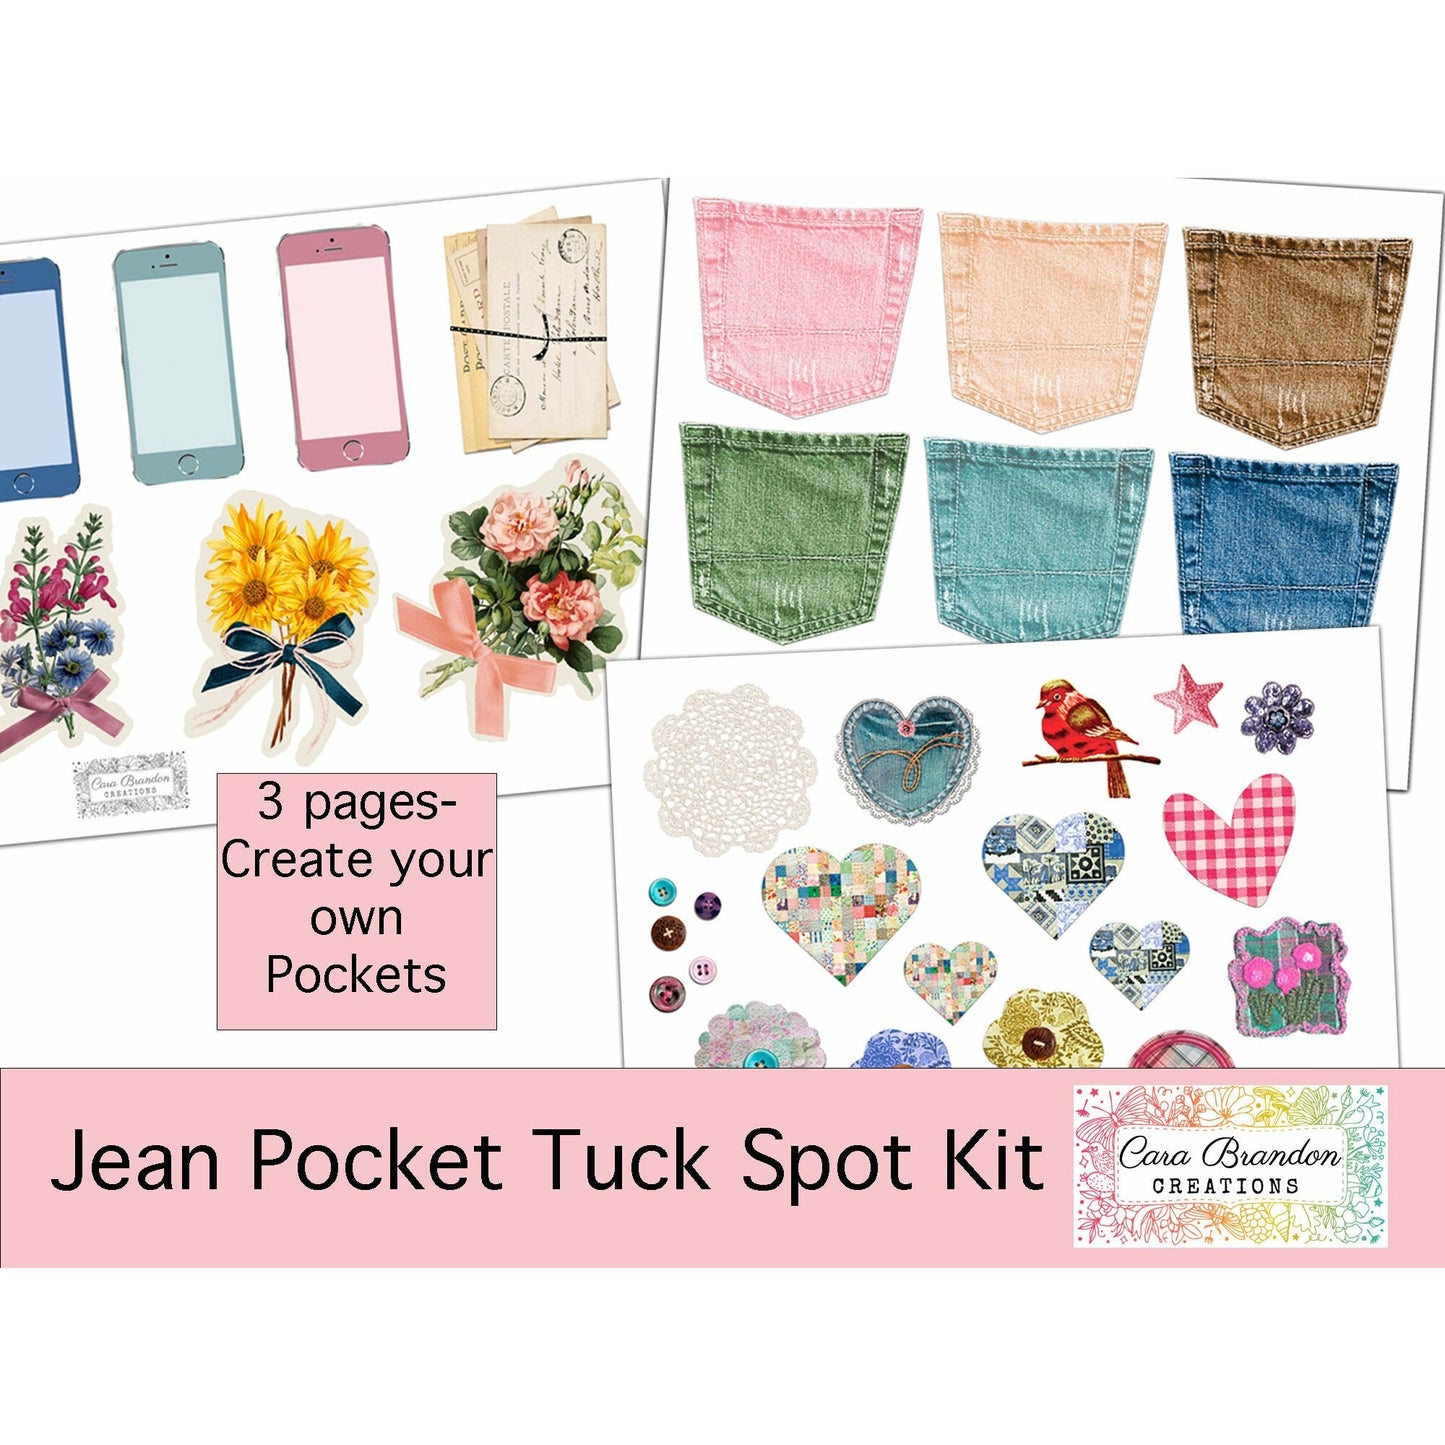 Jean Pocket Tuck Spot Kit